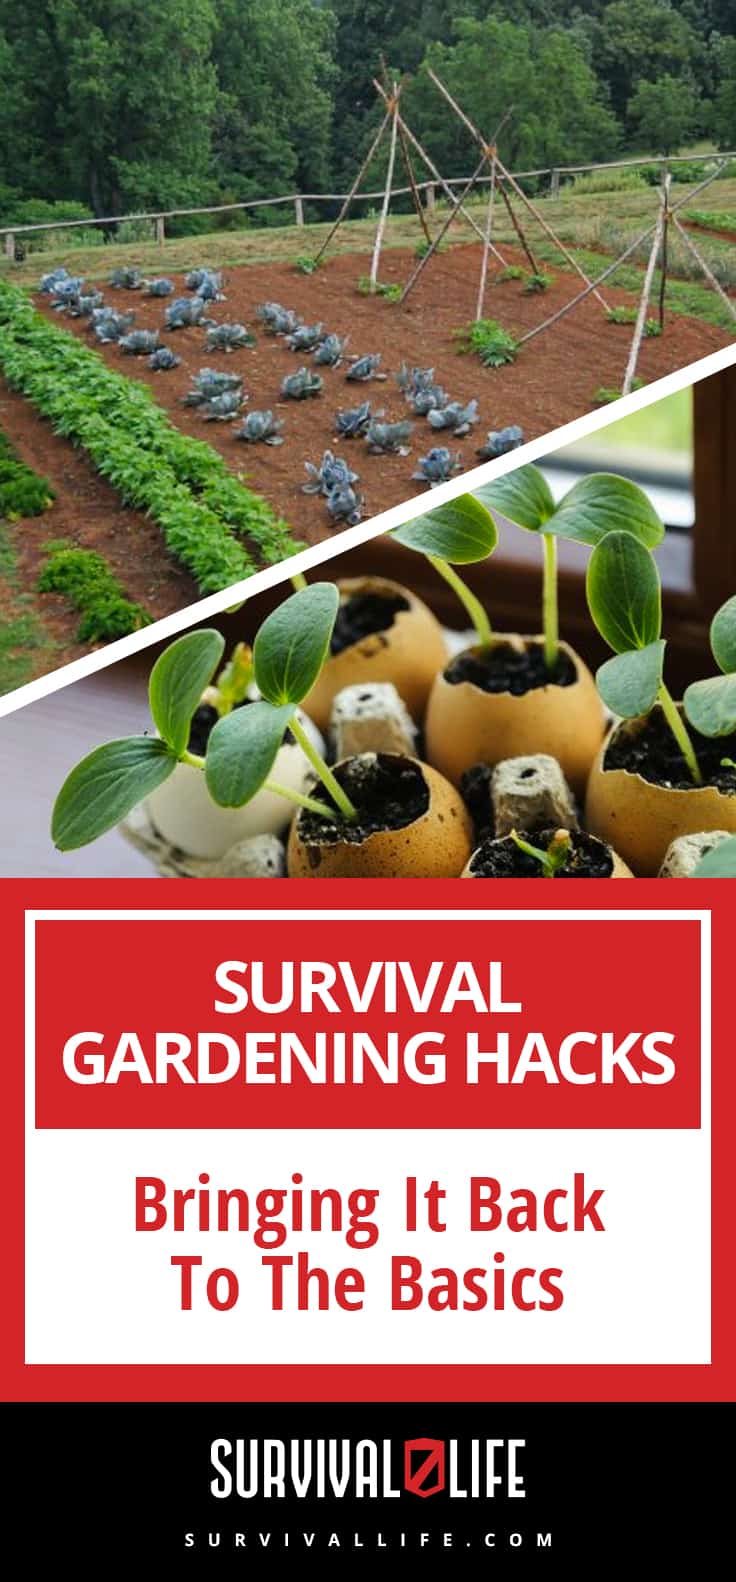 Survival Gardening Hacks | Bringing It Back To The Basics | https://survivallife.com/survival-gardening-hacks-basics/